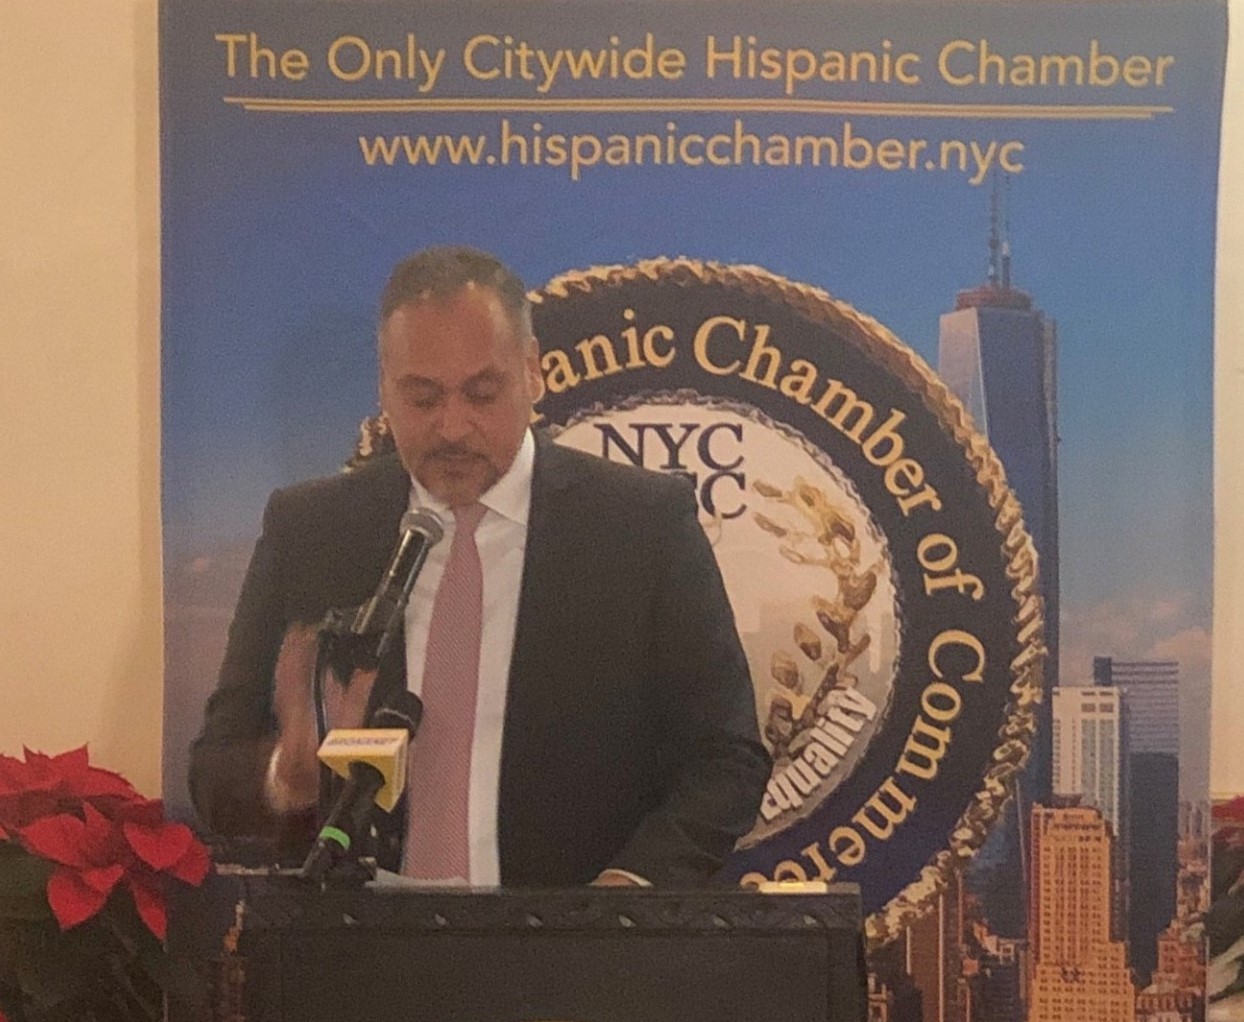 Marcelo Velez, vice president of Manhattanville Development, giving an acceptance speech